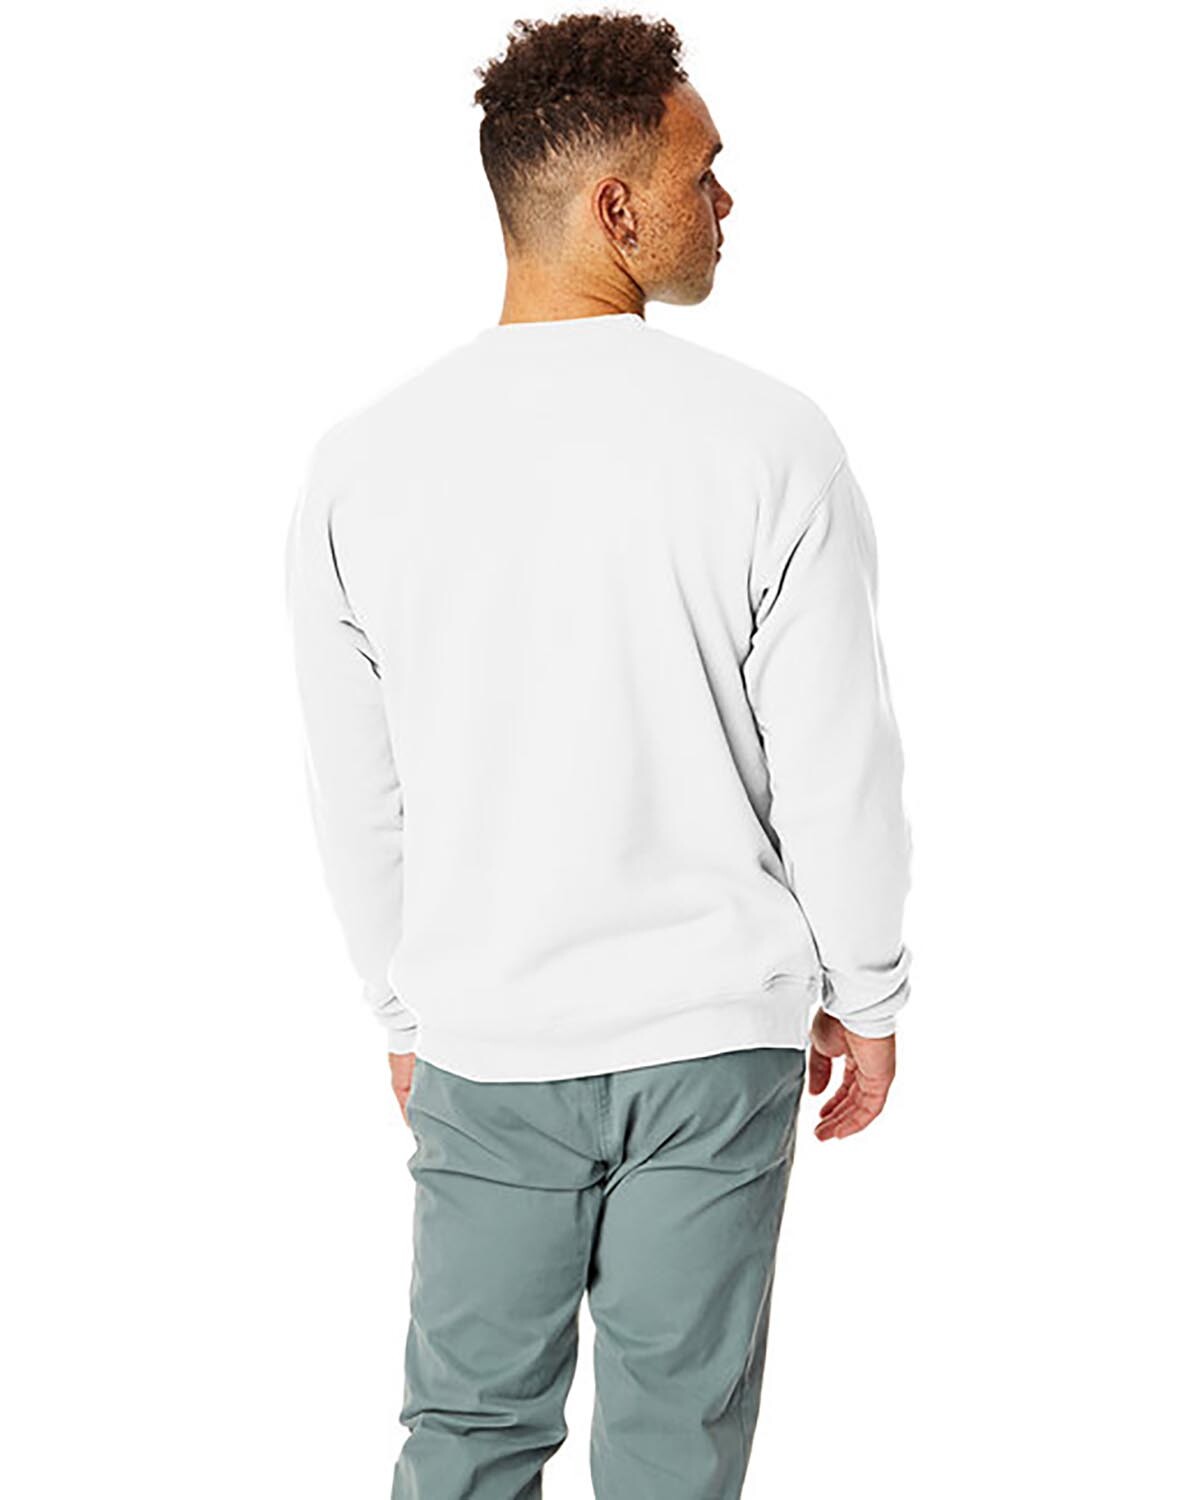 Hanes EcoSmart Men's Fleece Sweatshirt, 2-Pack (Big & Tall Sizes Available)